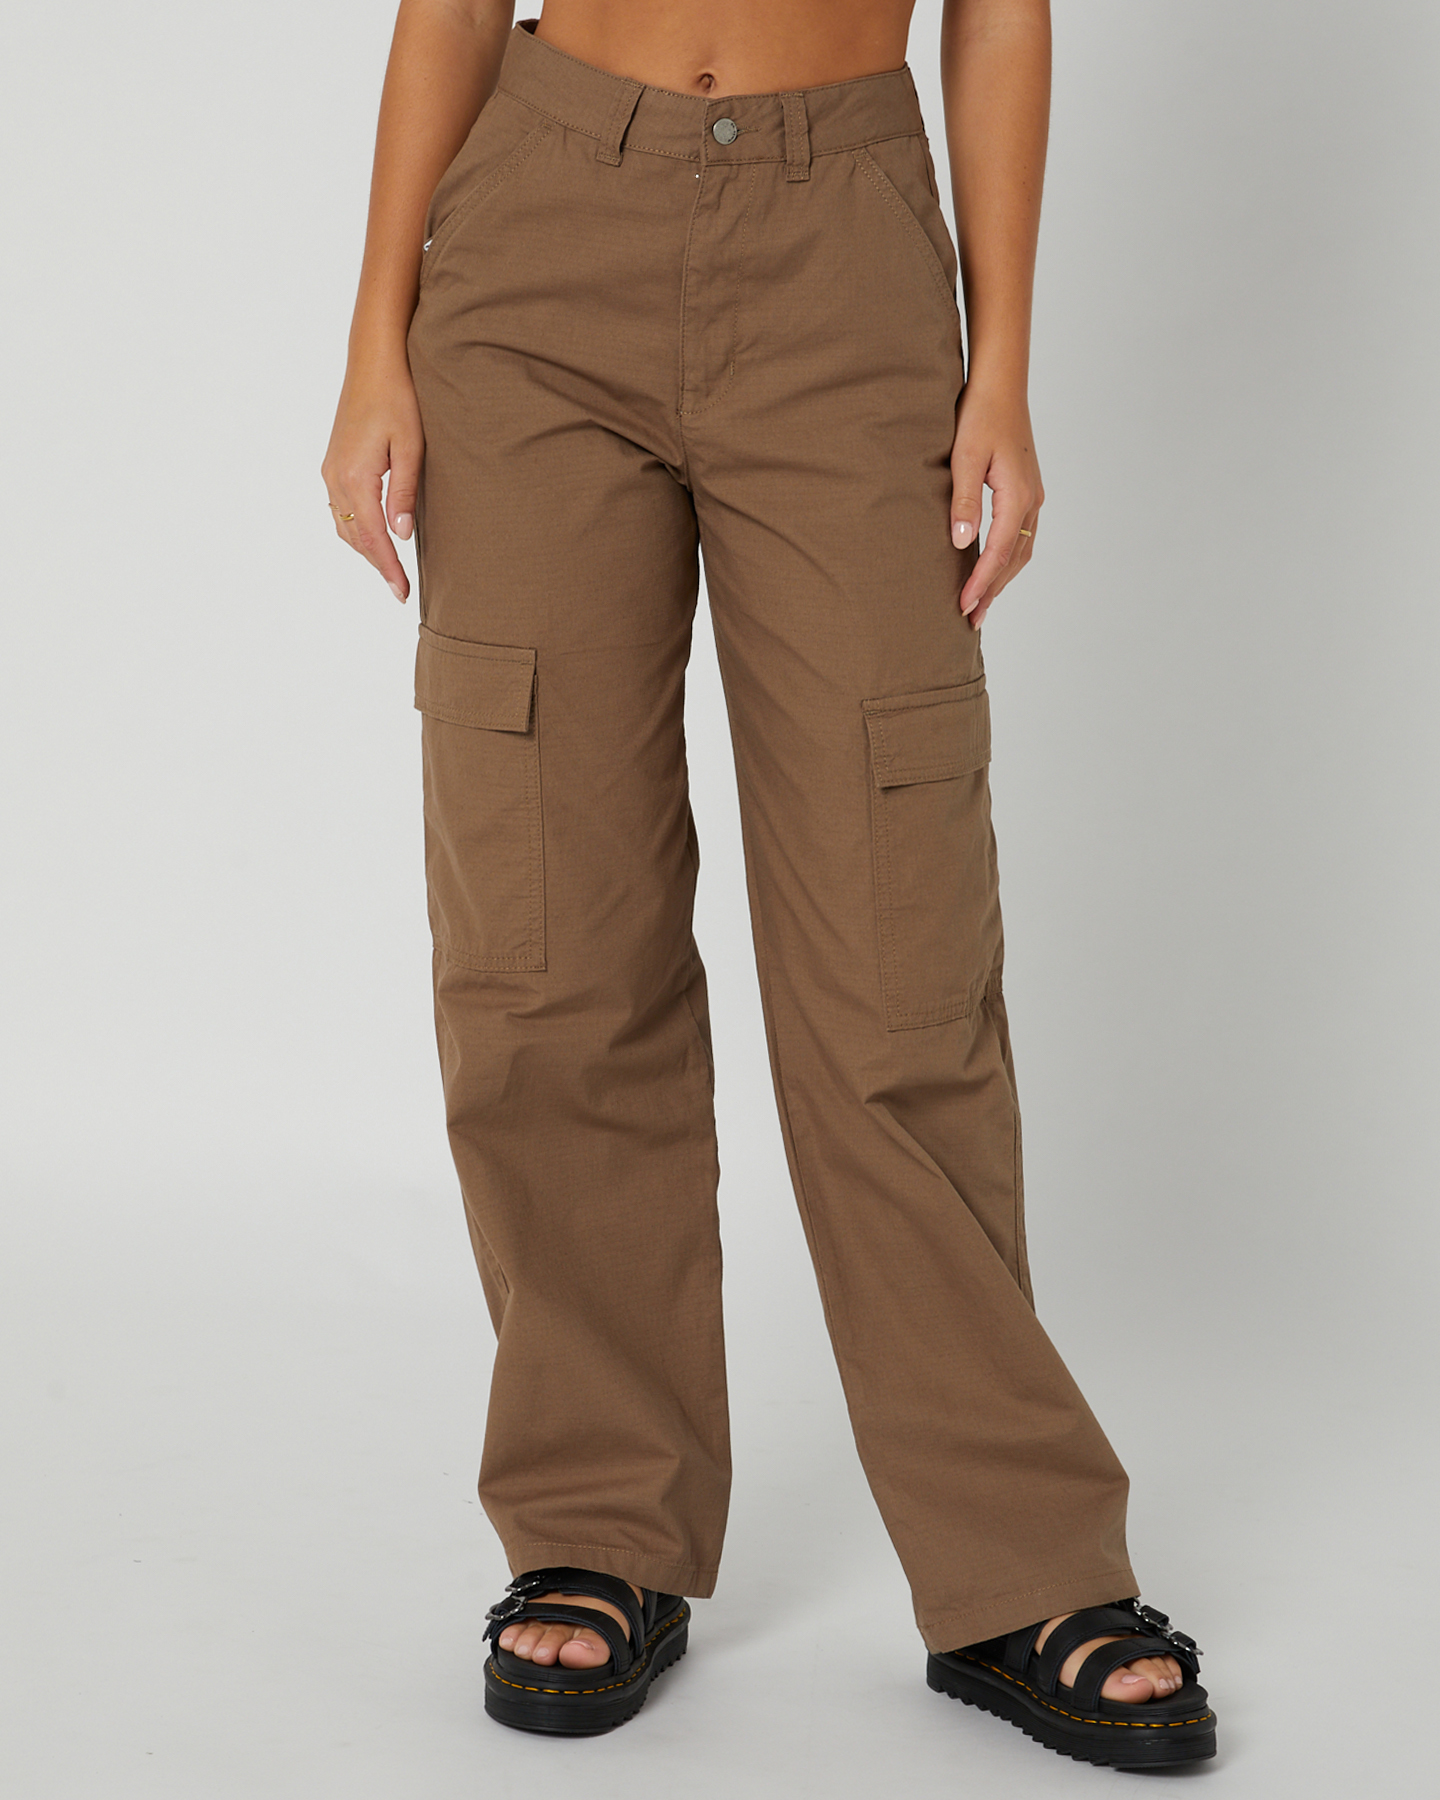 Dr Denim Donna cargo pants in brown